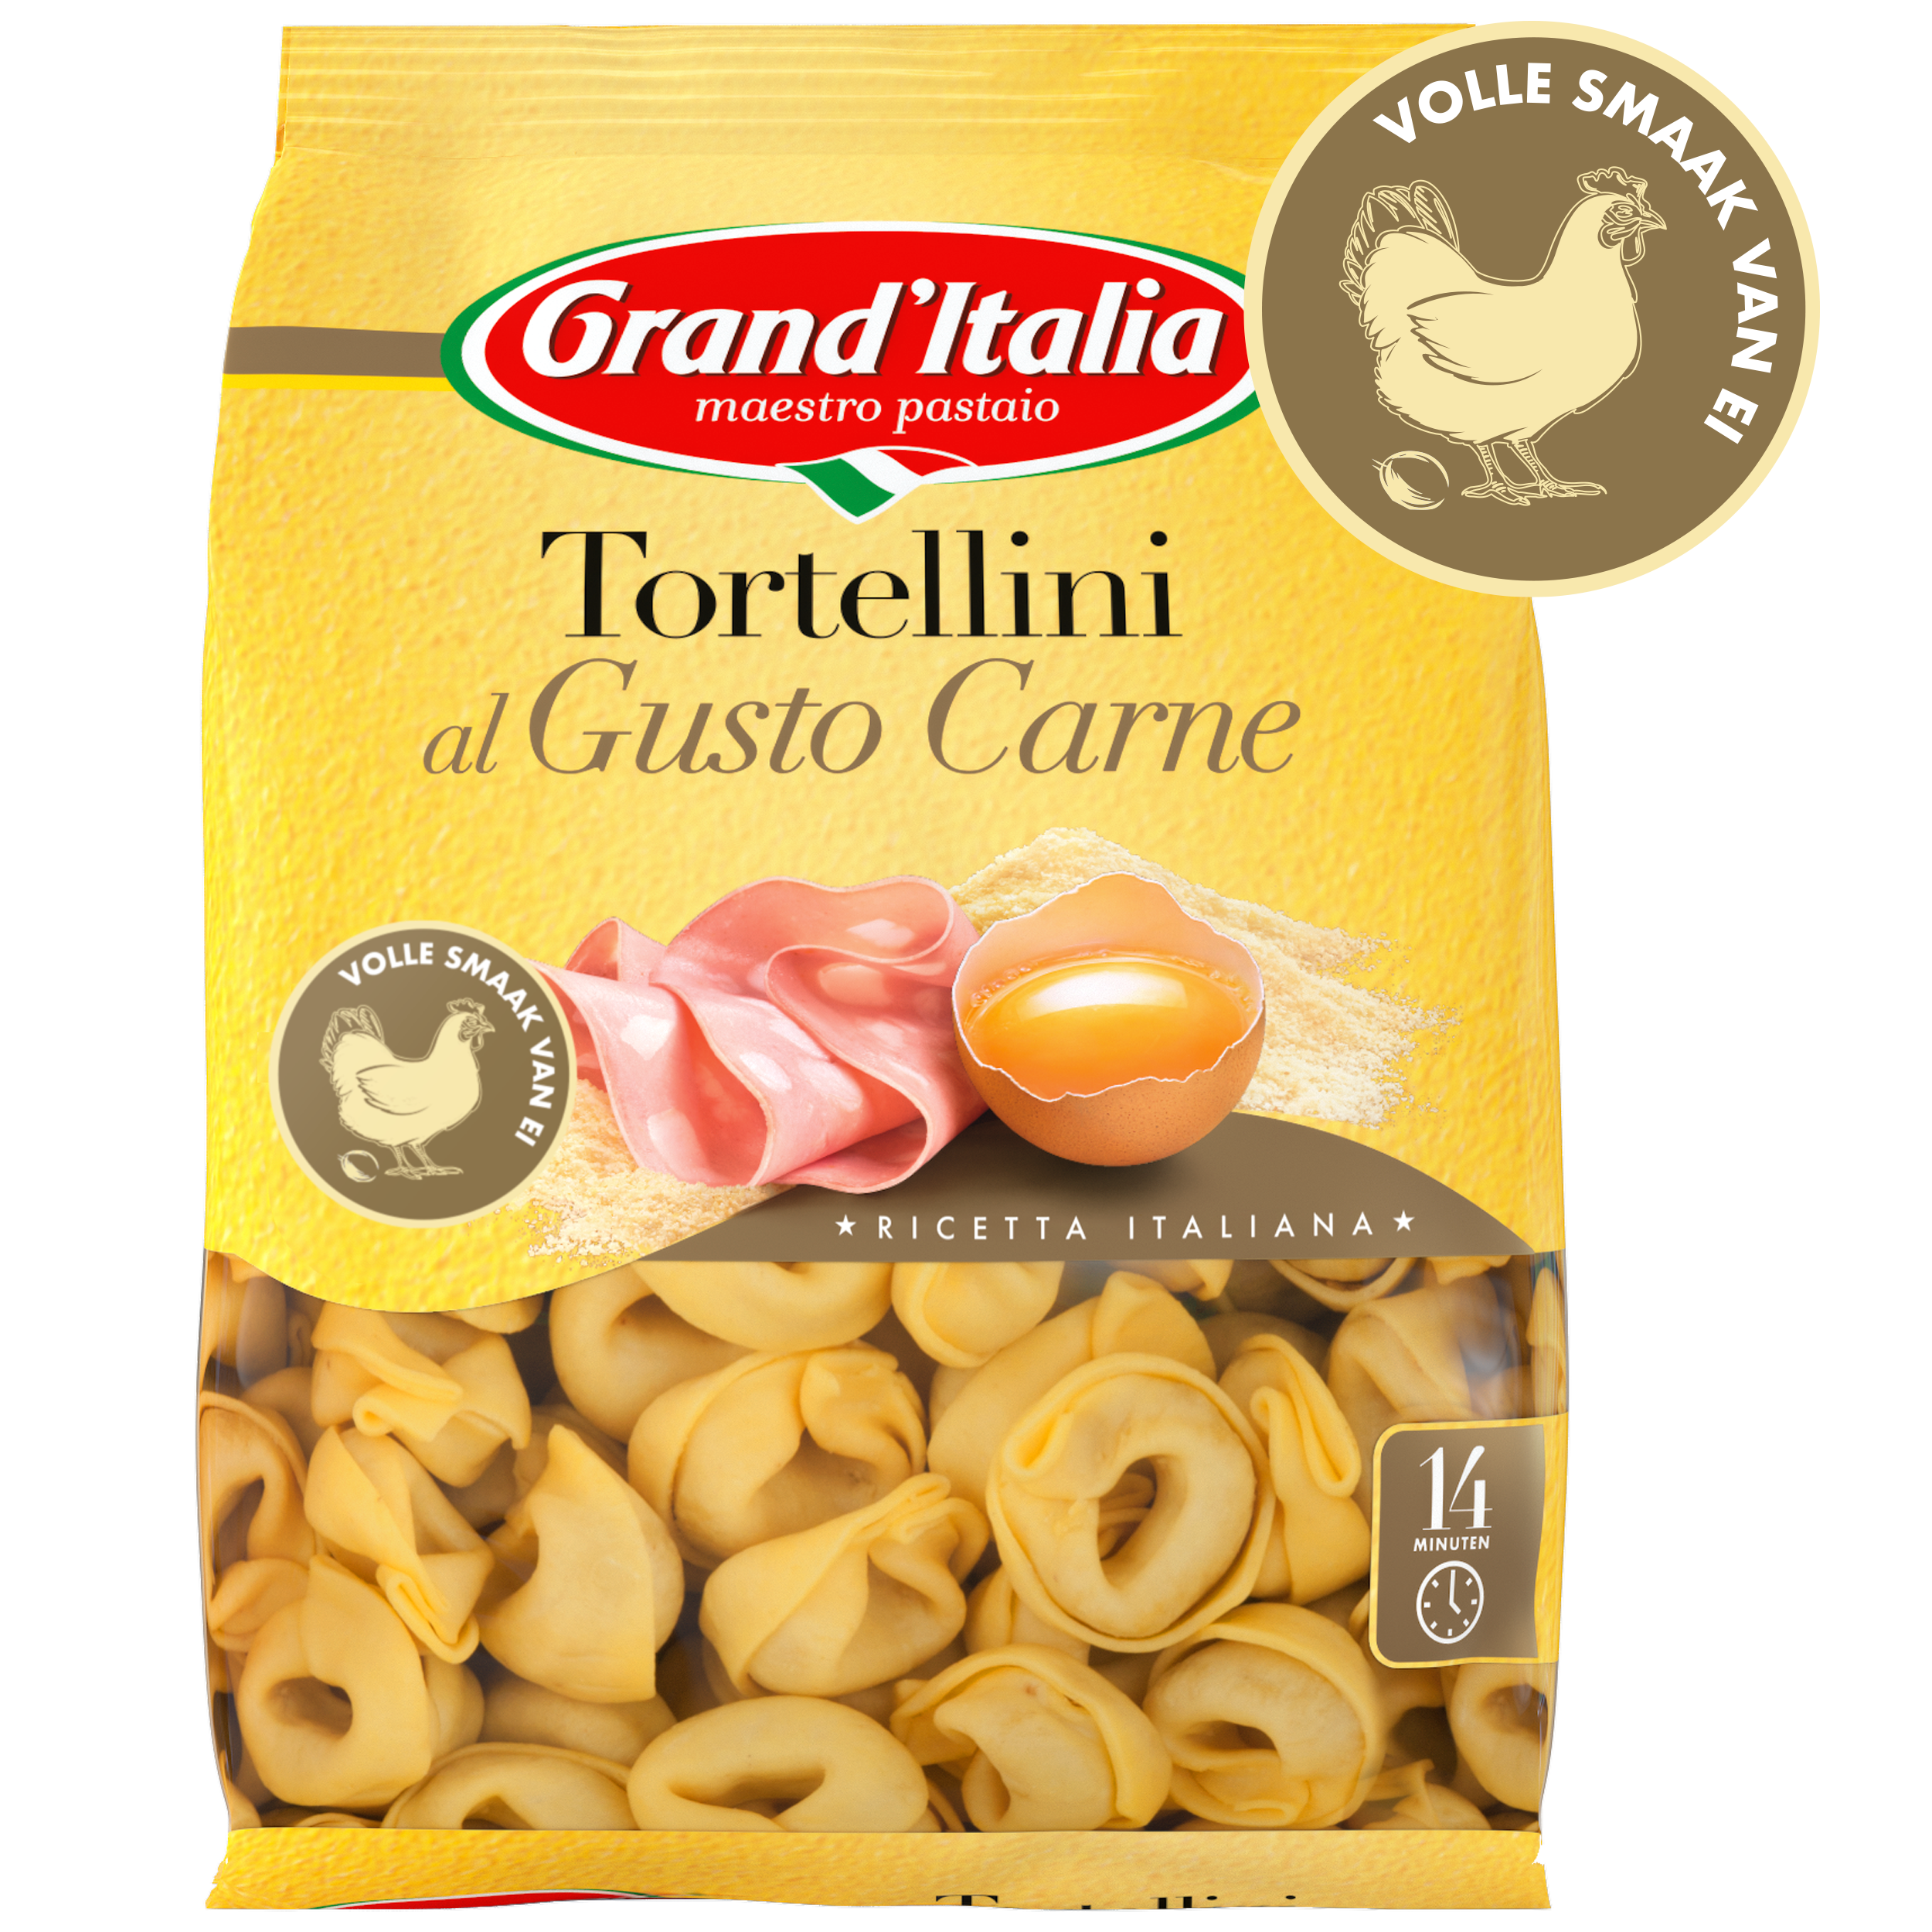 Pasta Tortellini al Gusto Carne 220g claim Grand'Italia